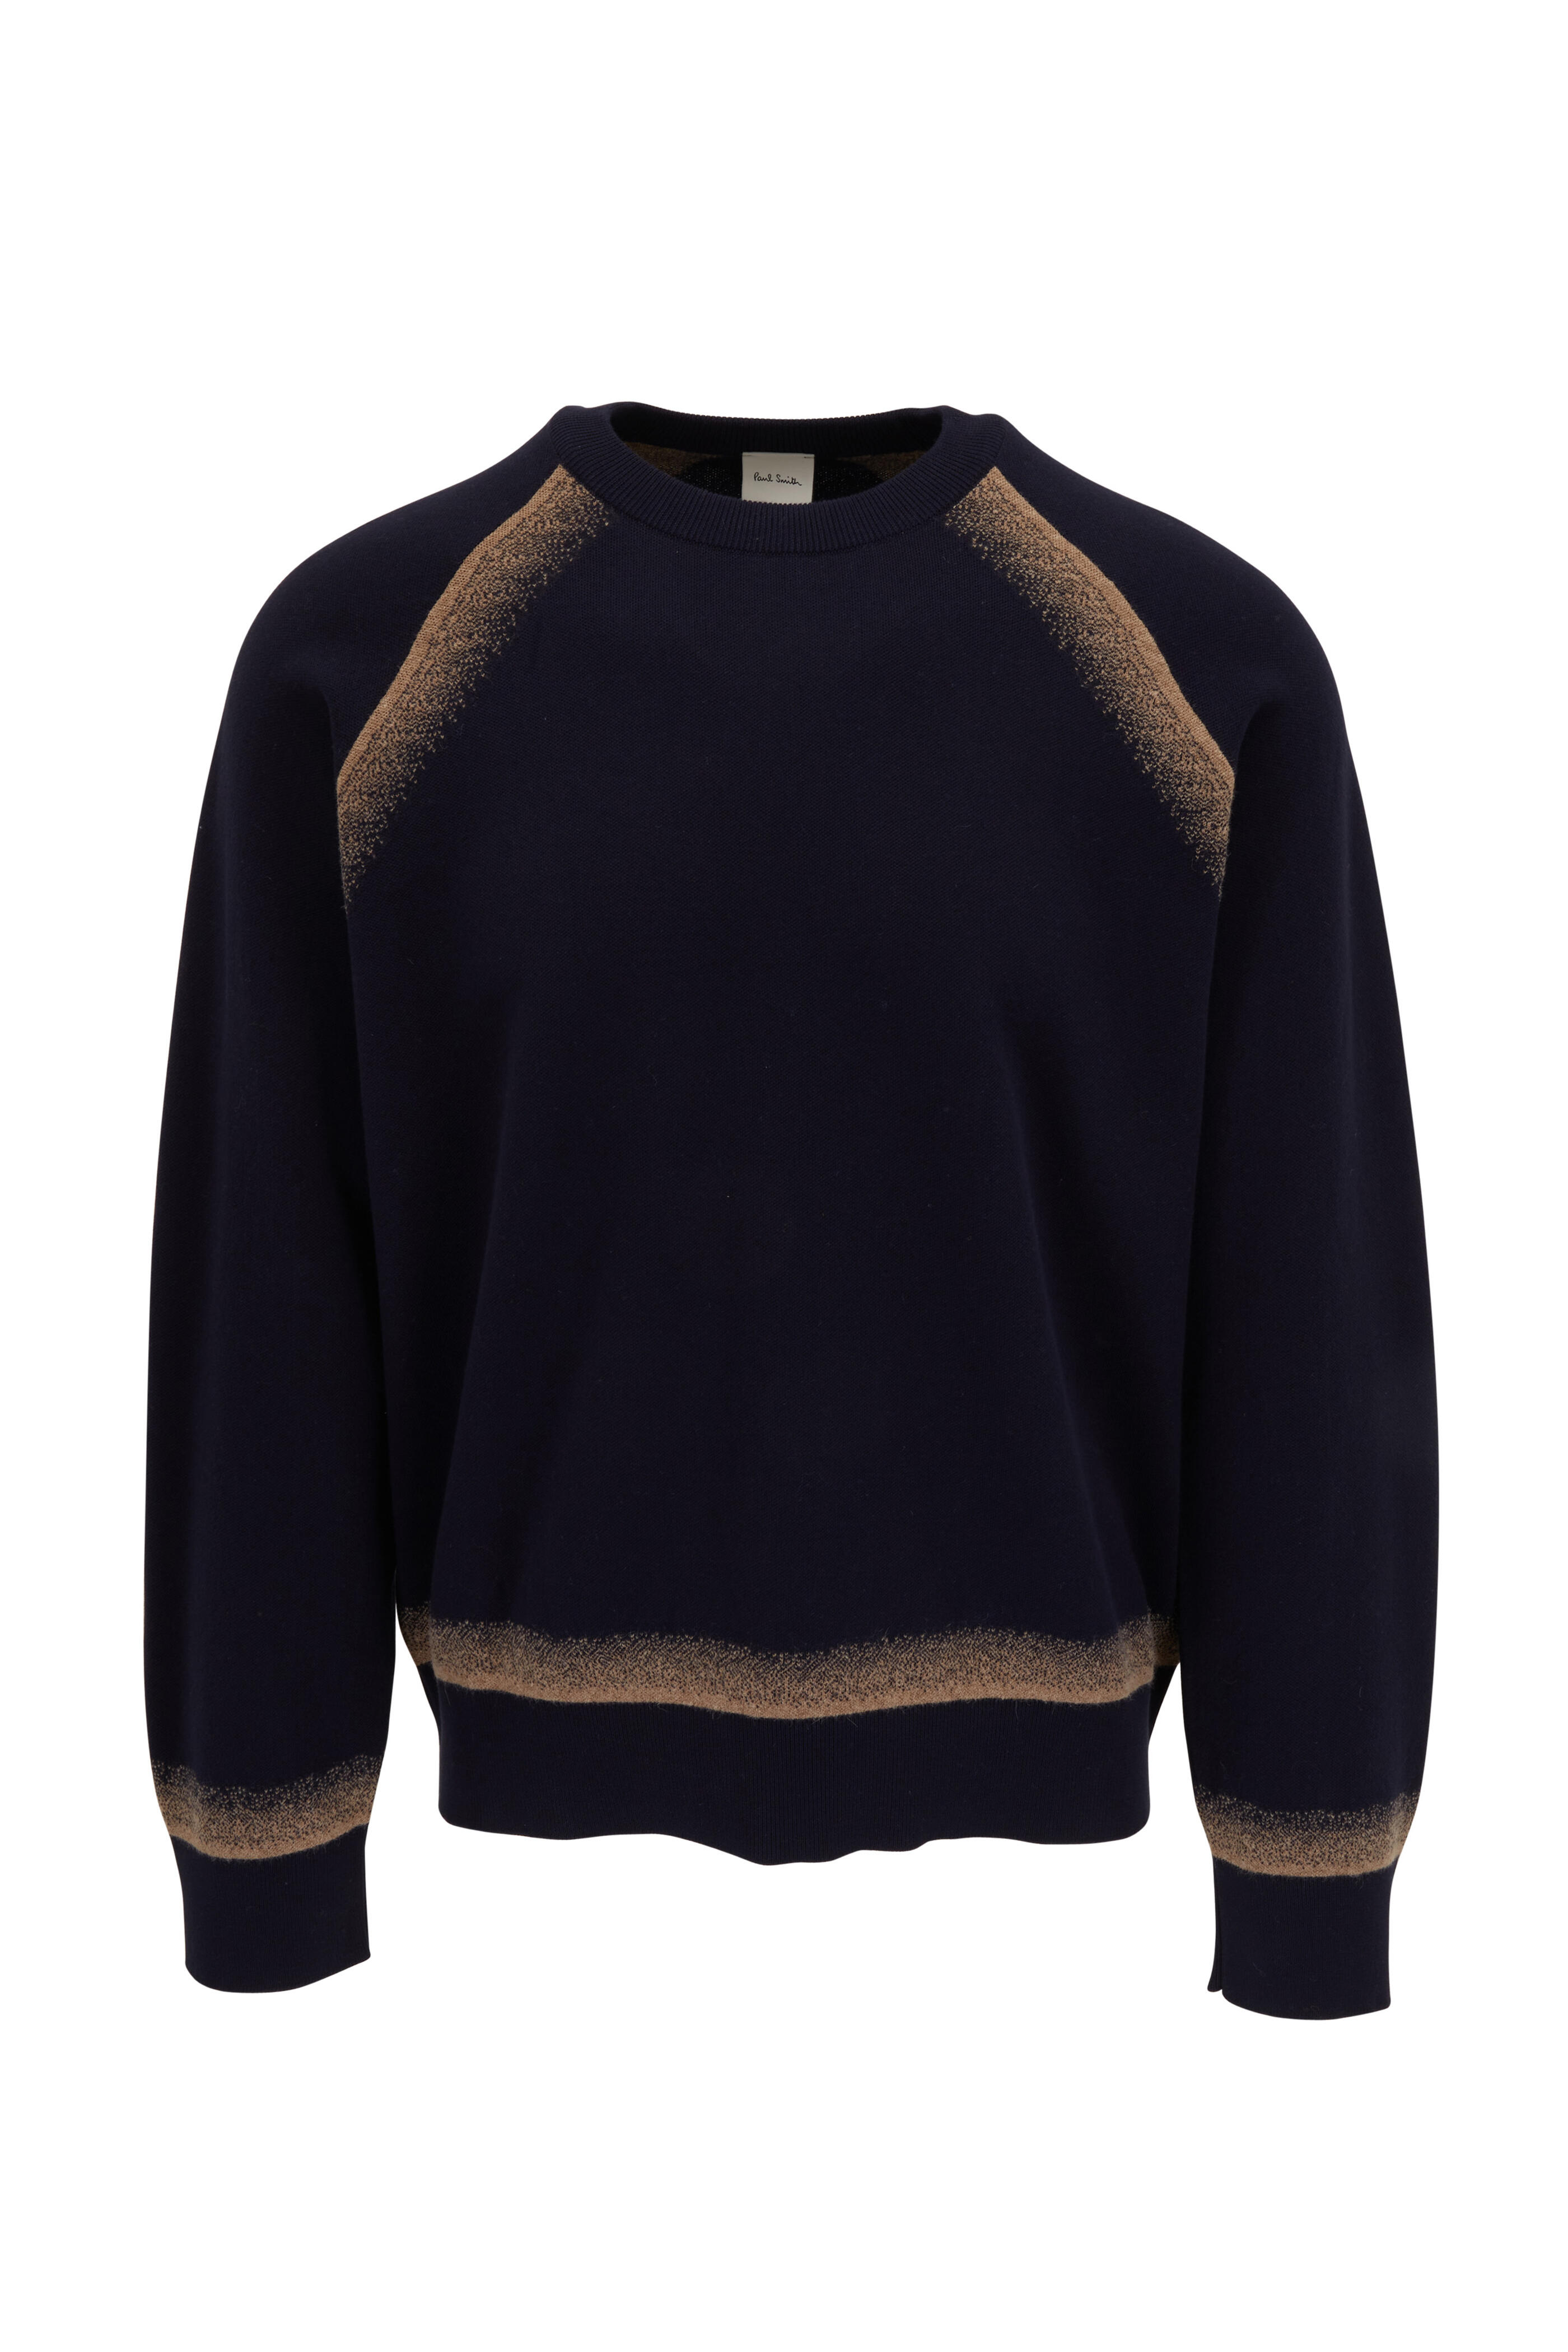 Paul Smith - Navy Haze Border Cotton Blend Crewneck Sweater